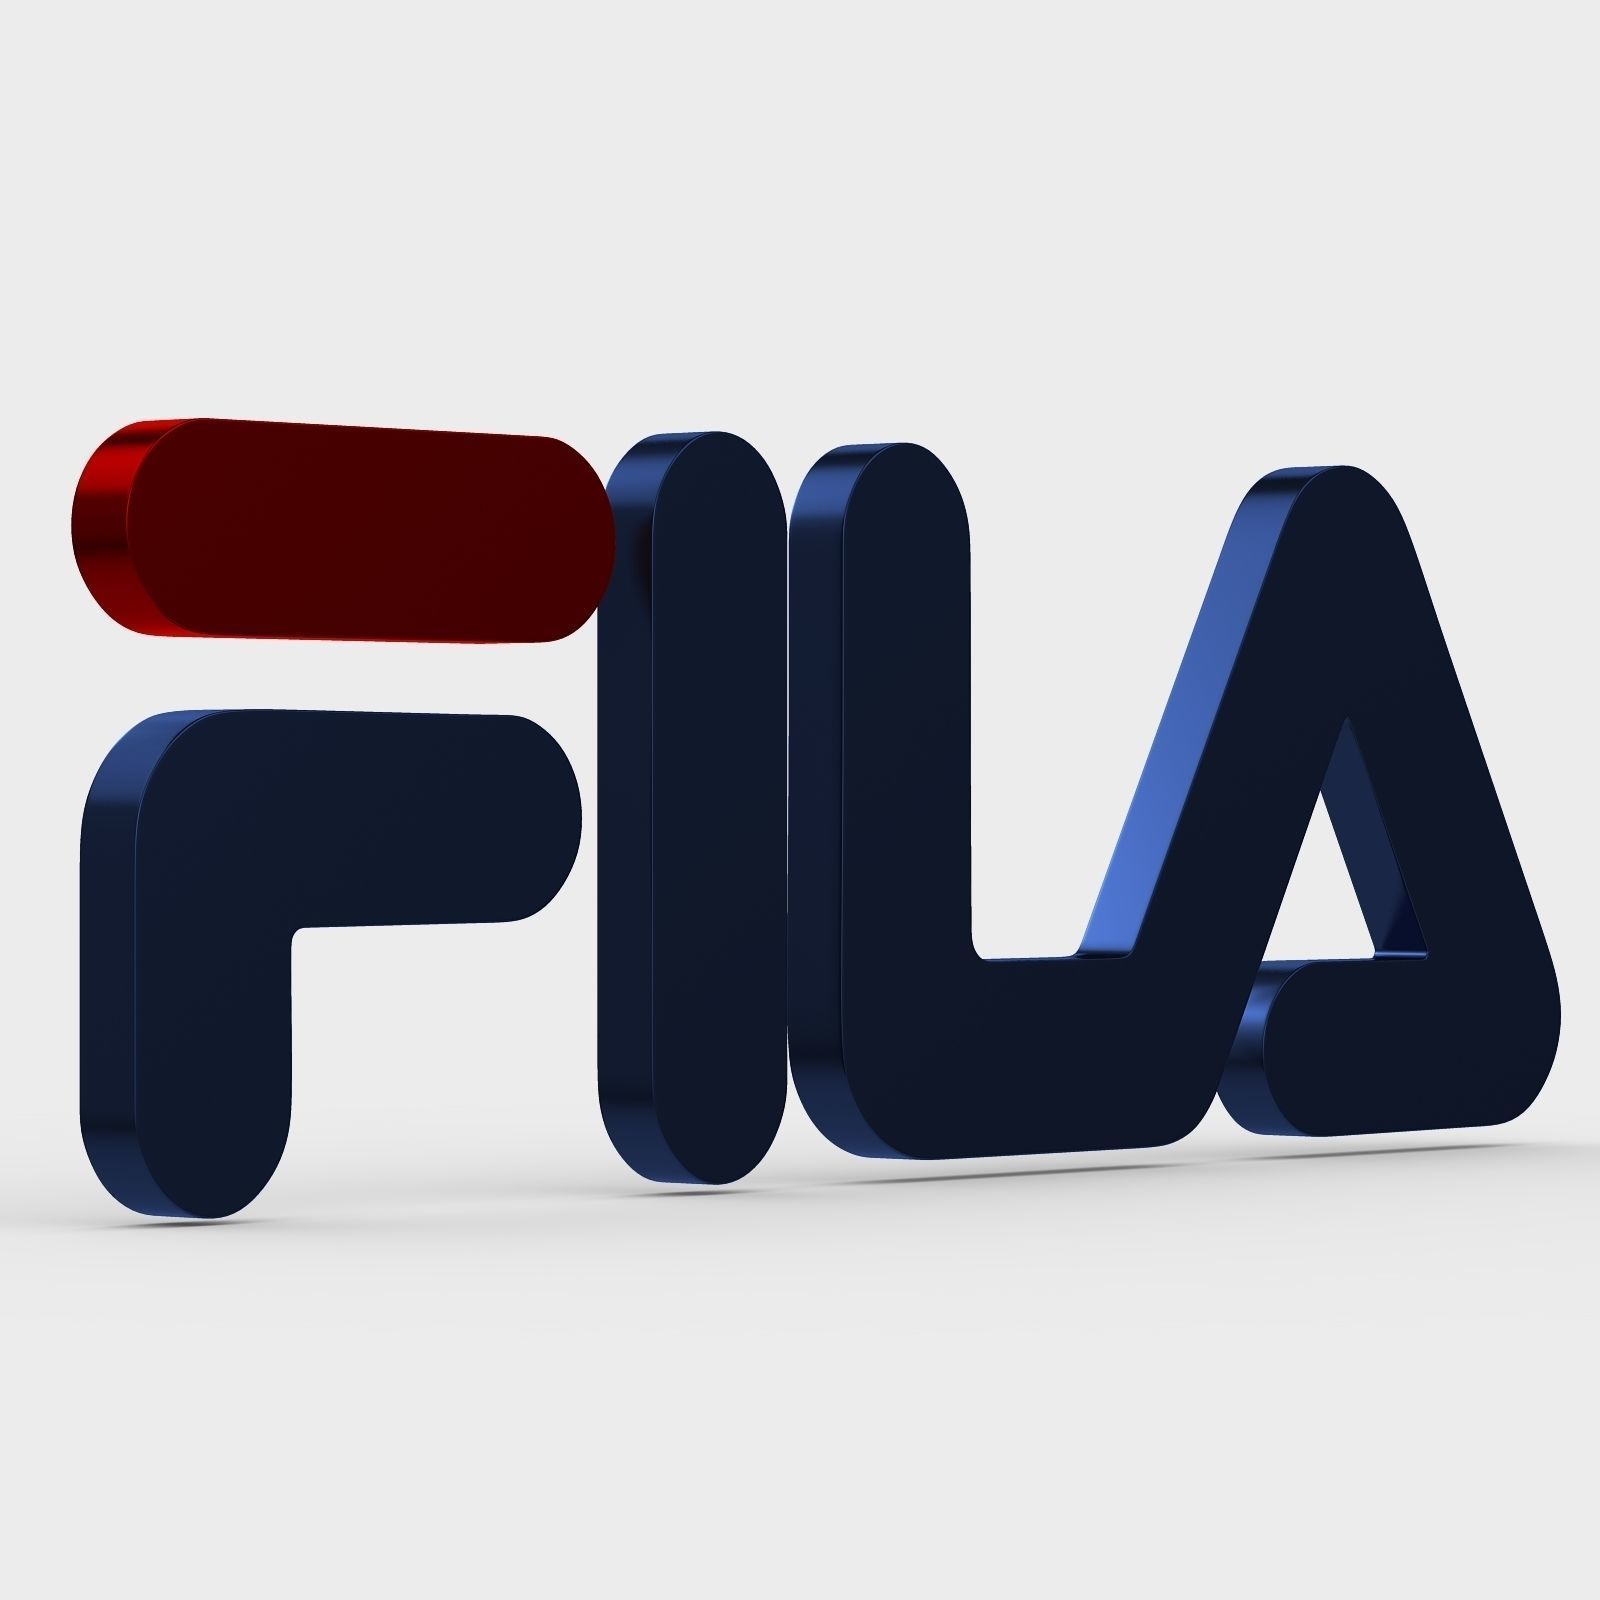 Fila Logo Wallpaper Free Fila Logo Background